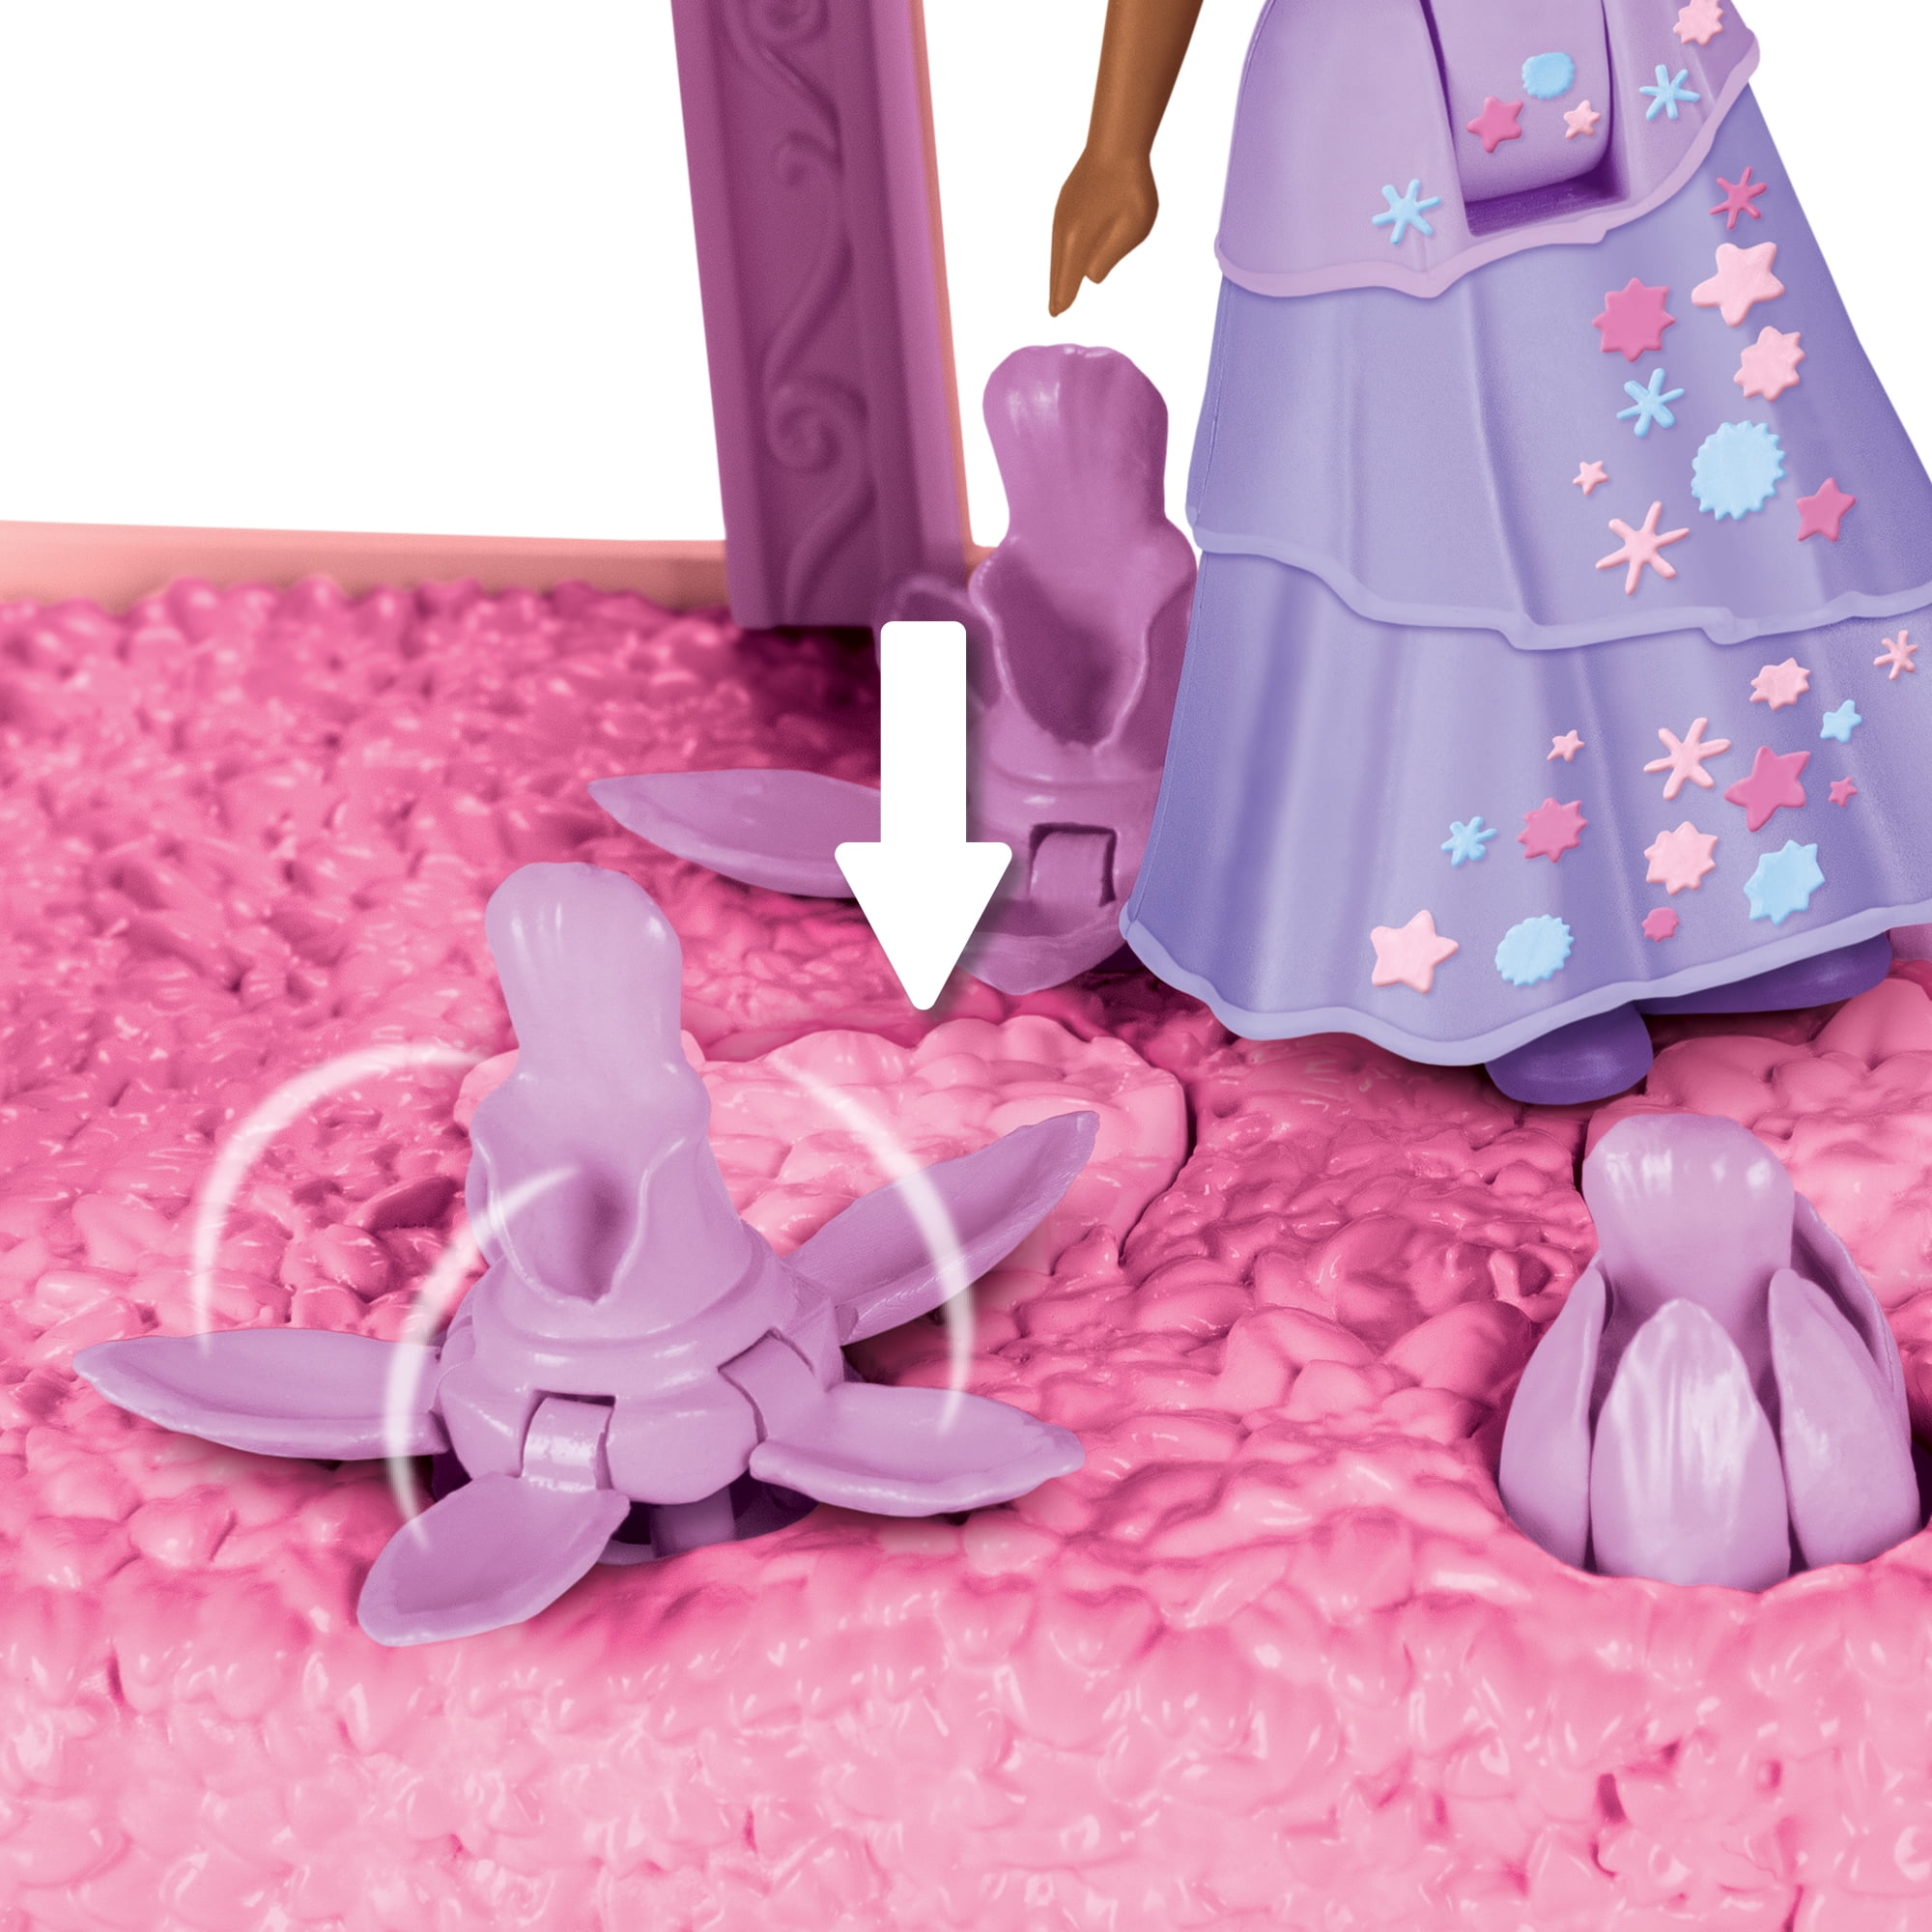 Disney ENCANTO Isabela's Small Doll Pink Purple Garden Room Playset 7 Pc Set NEW 